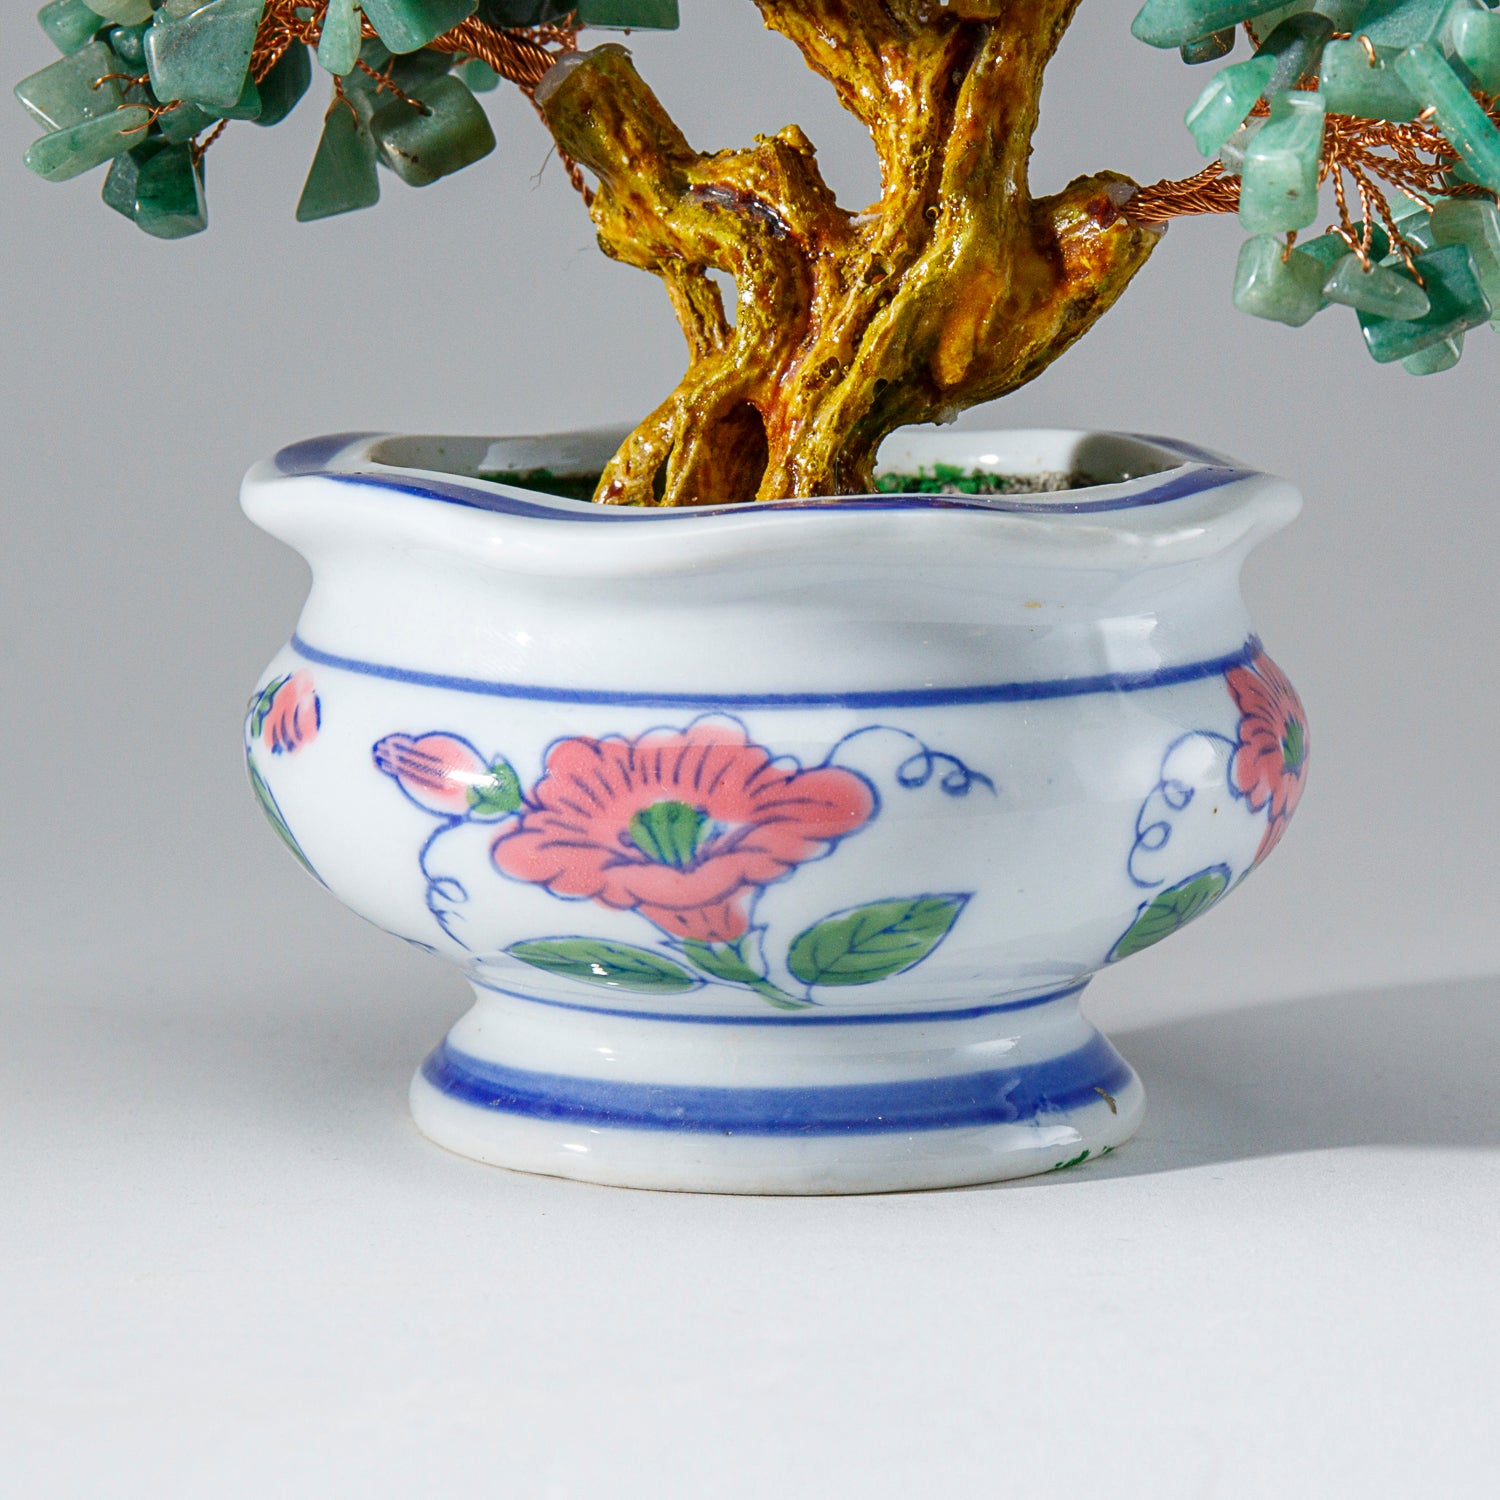 Genuine Green Aventurine Gemstone Bonsai Tree in Round Ceramic Pot (7” Tall)